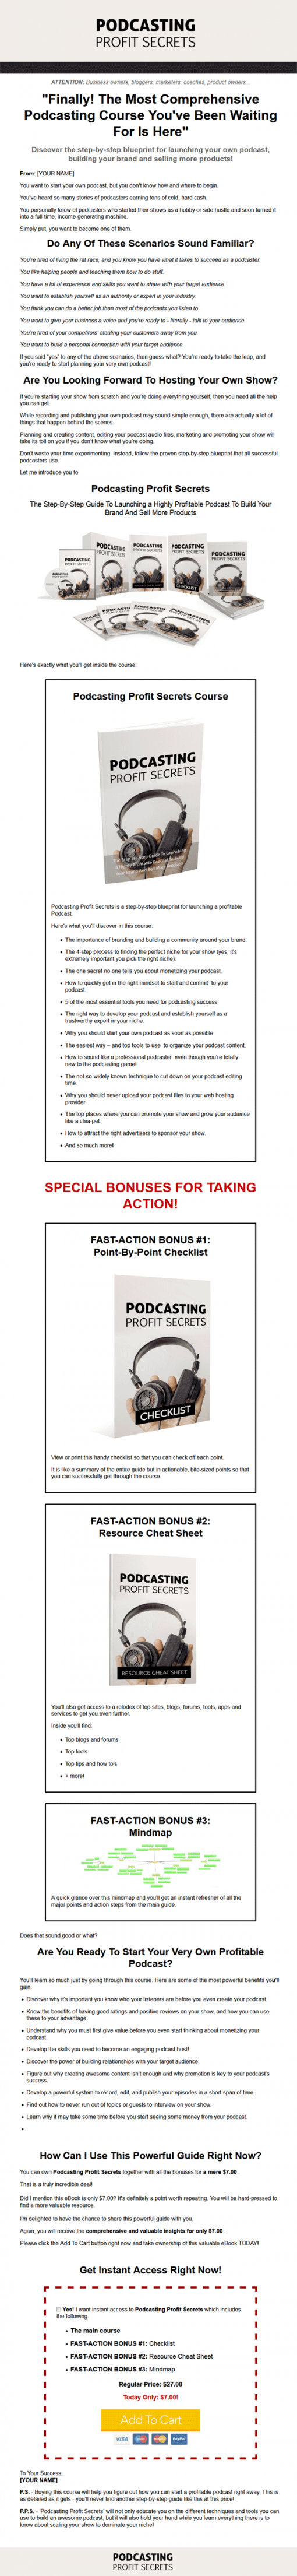 Podcasting Profit Secrets Ebook and Videos MRR